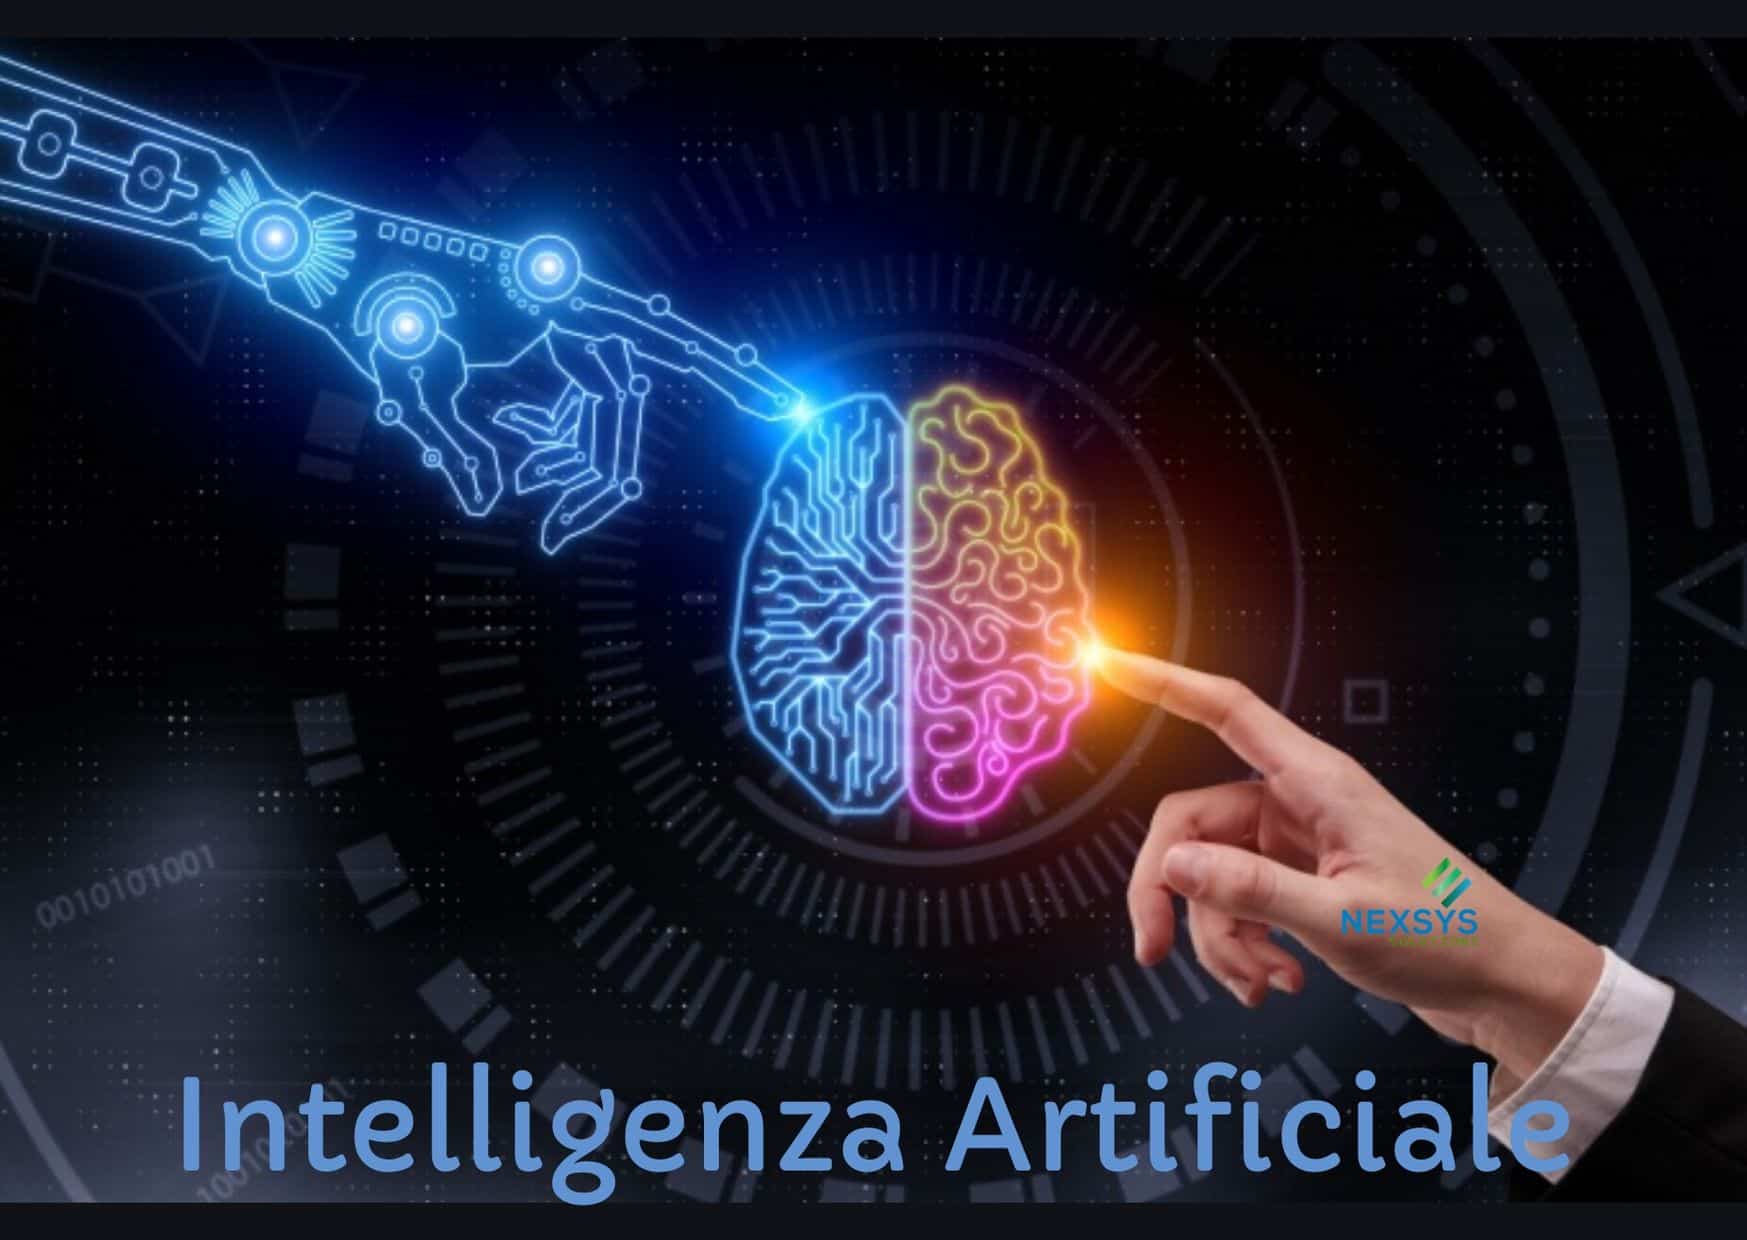 Intelligenza artificiale